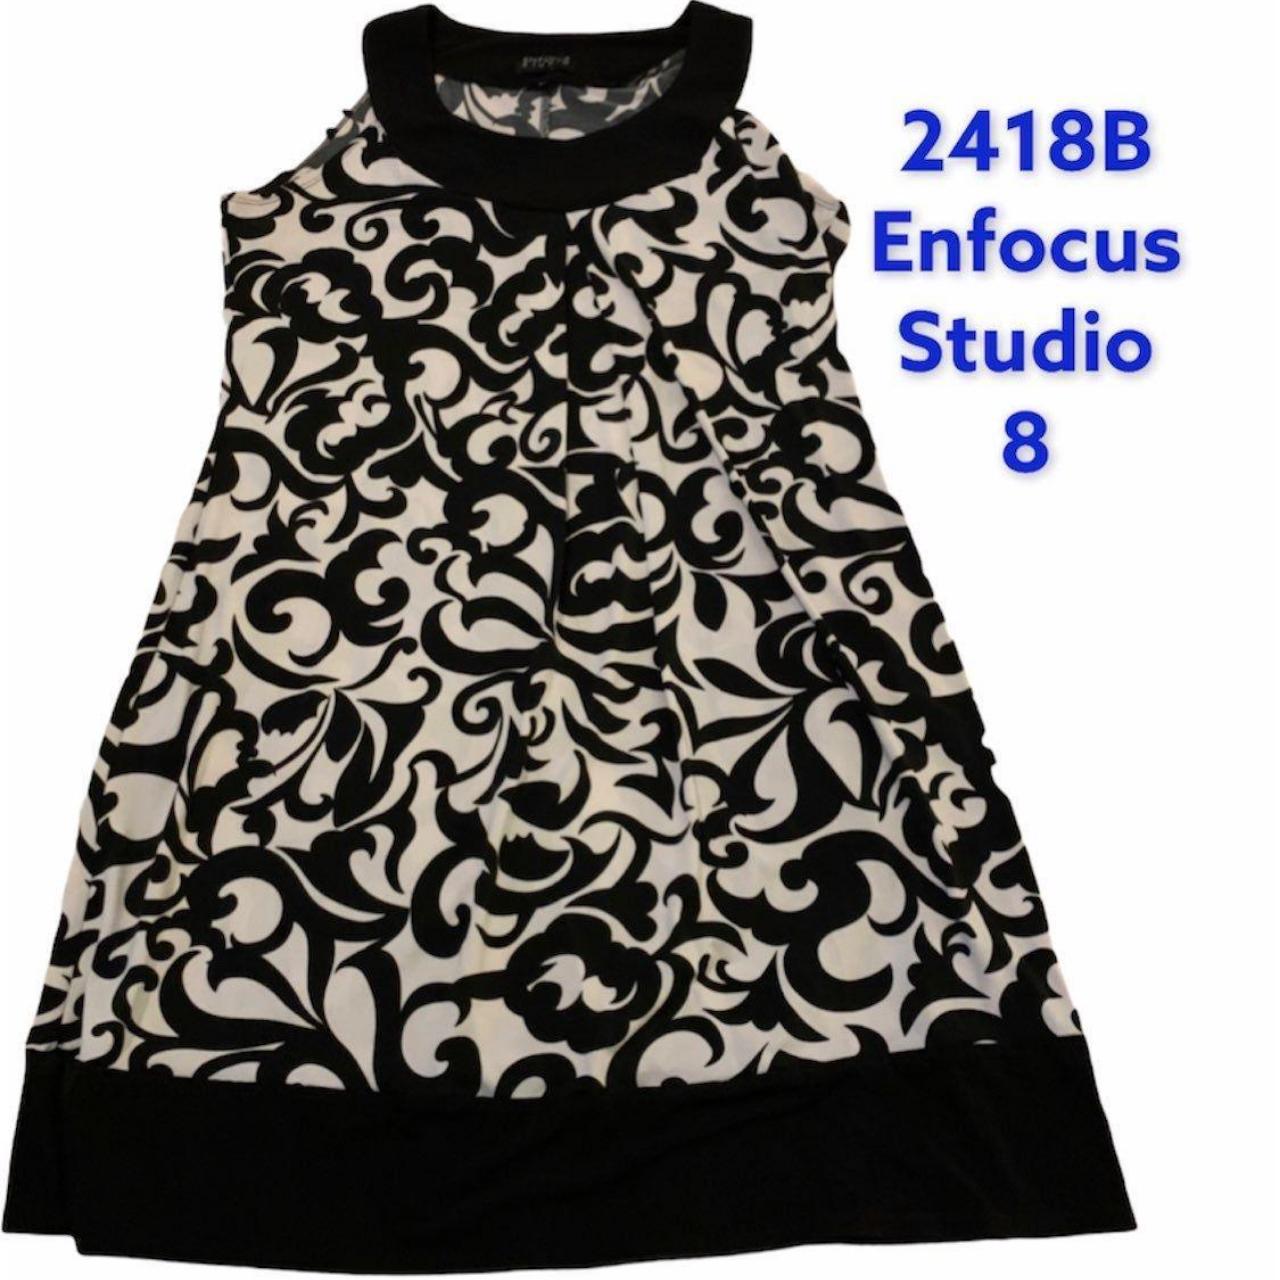 Enfocus Studio Women's Black Dress